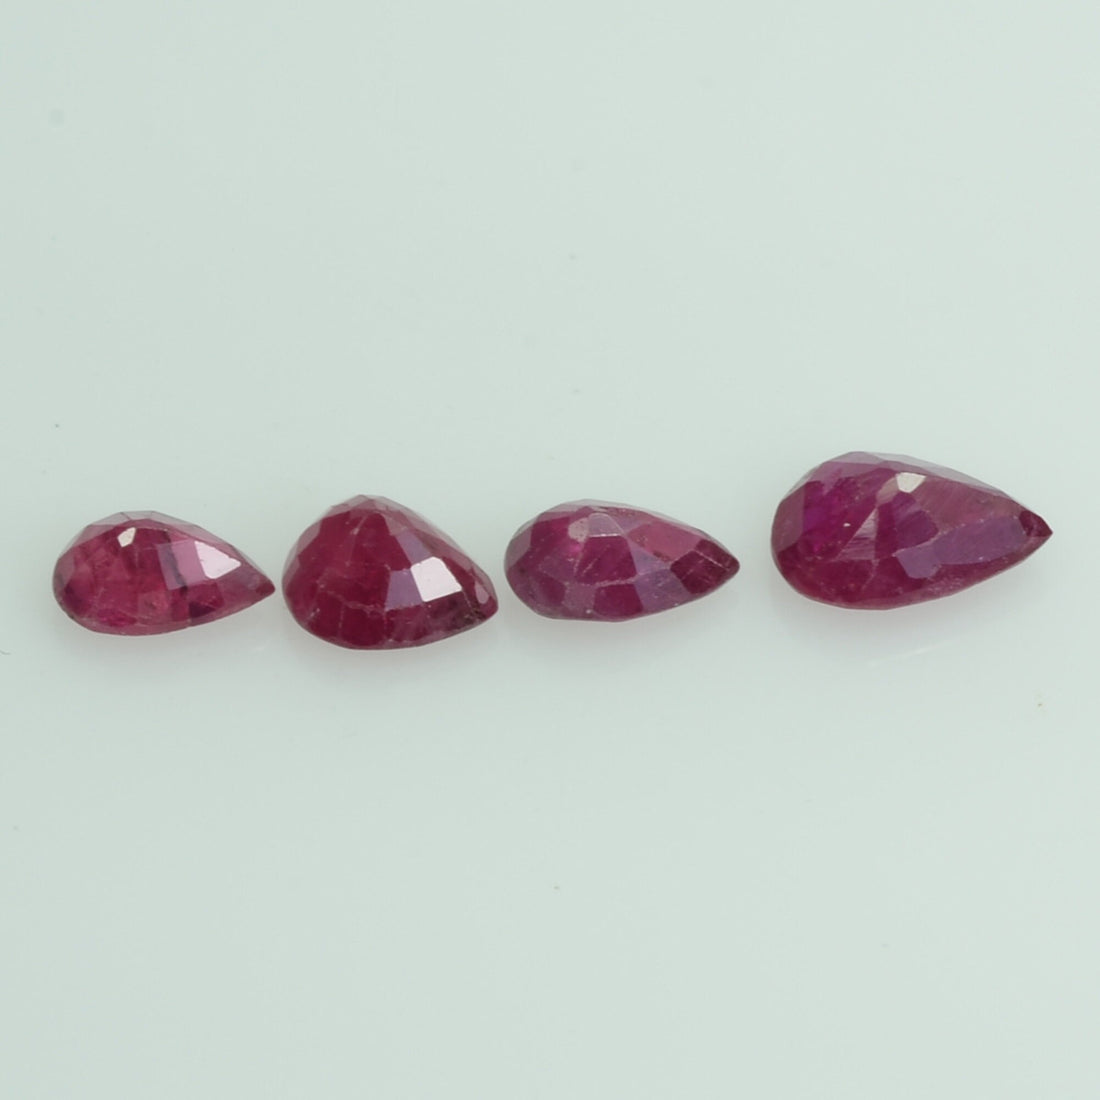 6.62 Cts Natural Ruby Loose Gemstone Pear Cut